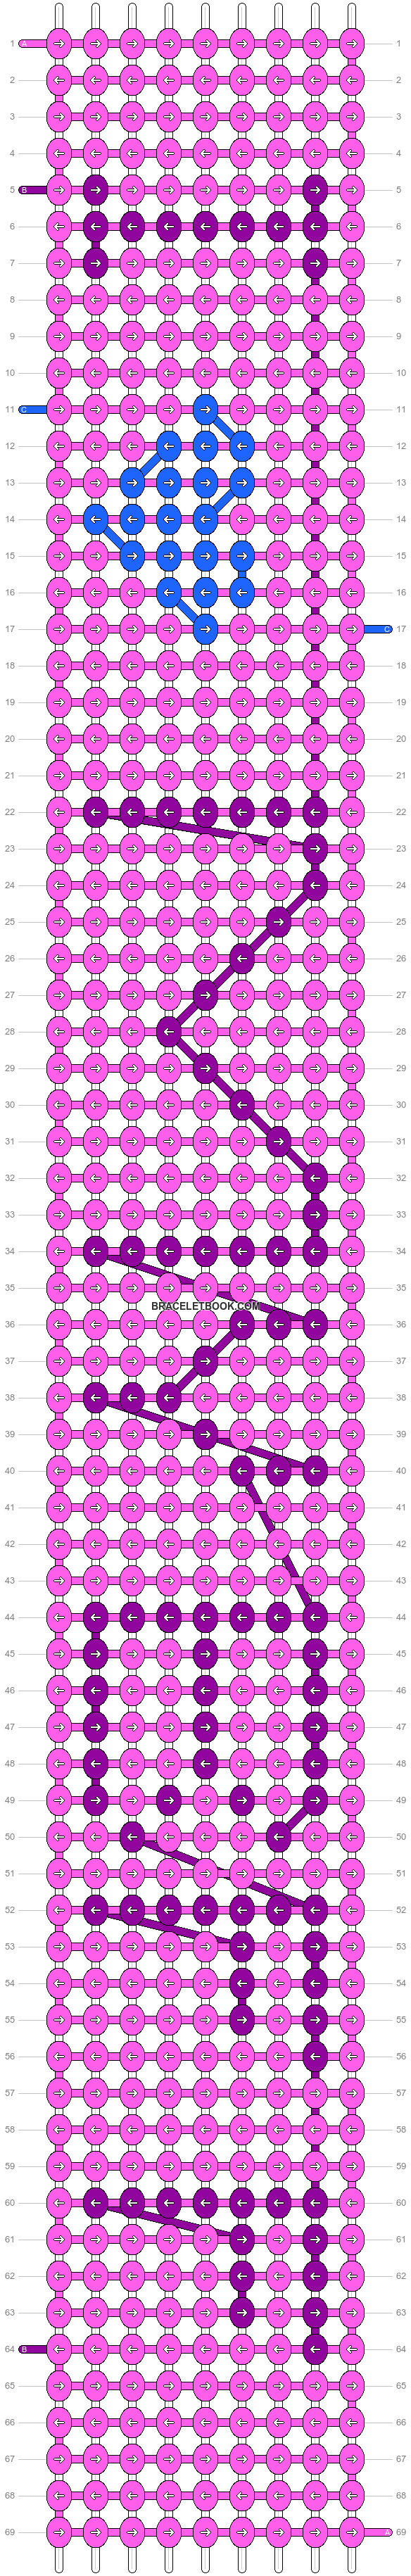 Alpha pattern #1218 variation #22388 pattern